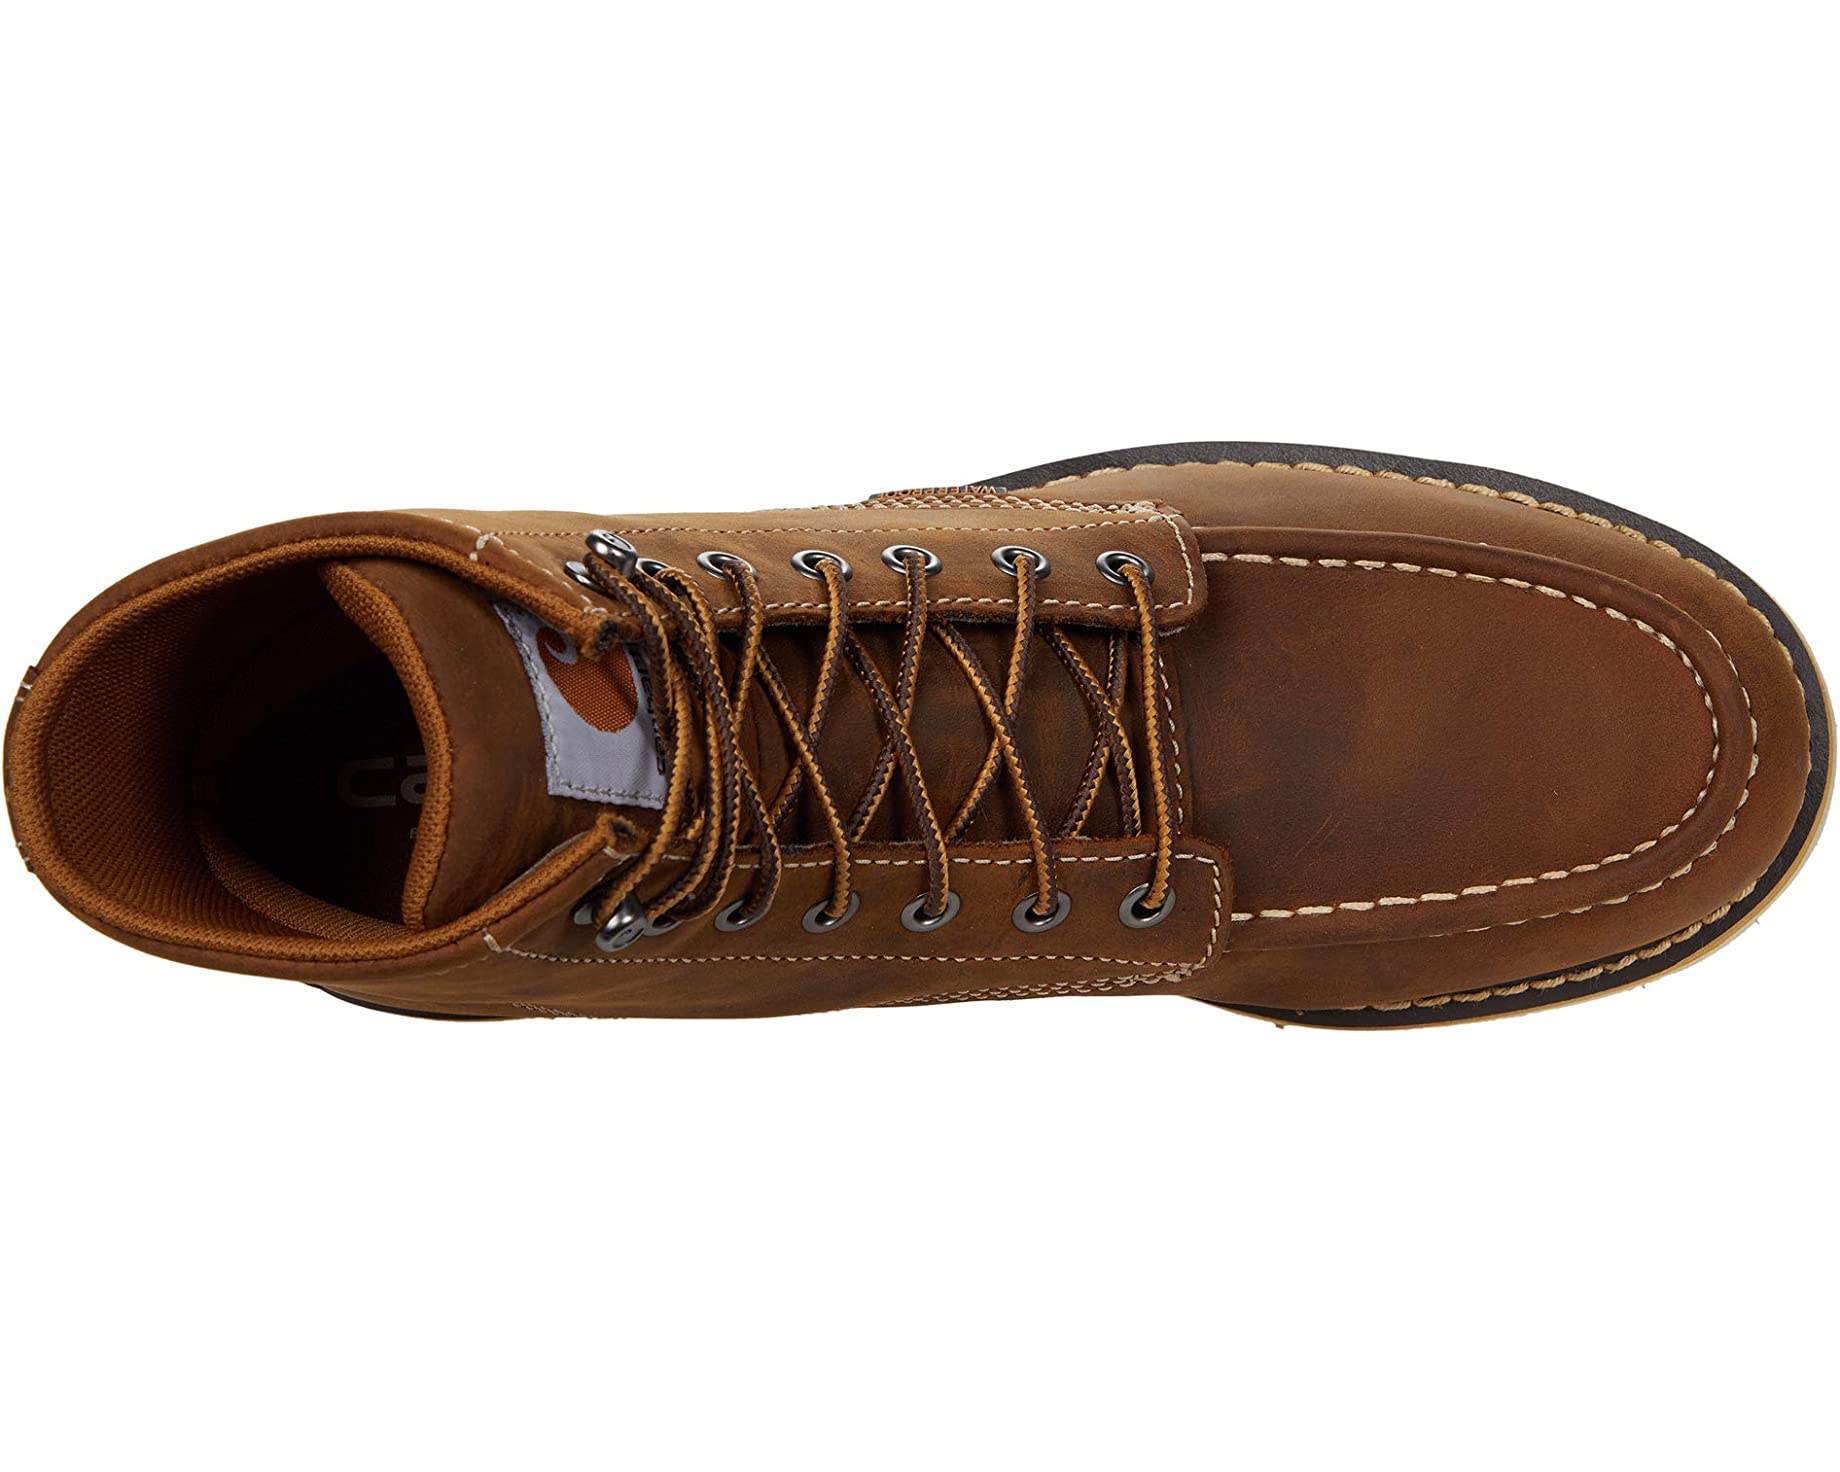 Ботинки Wedge 6 Waterproof Steel Toe Carhartt, коричневый